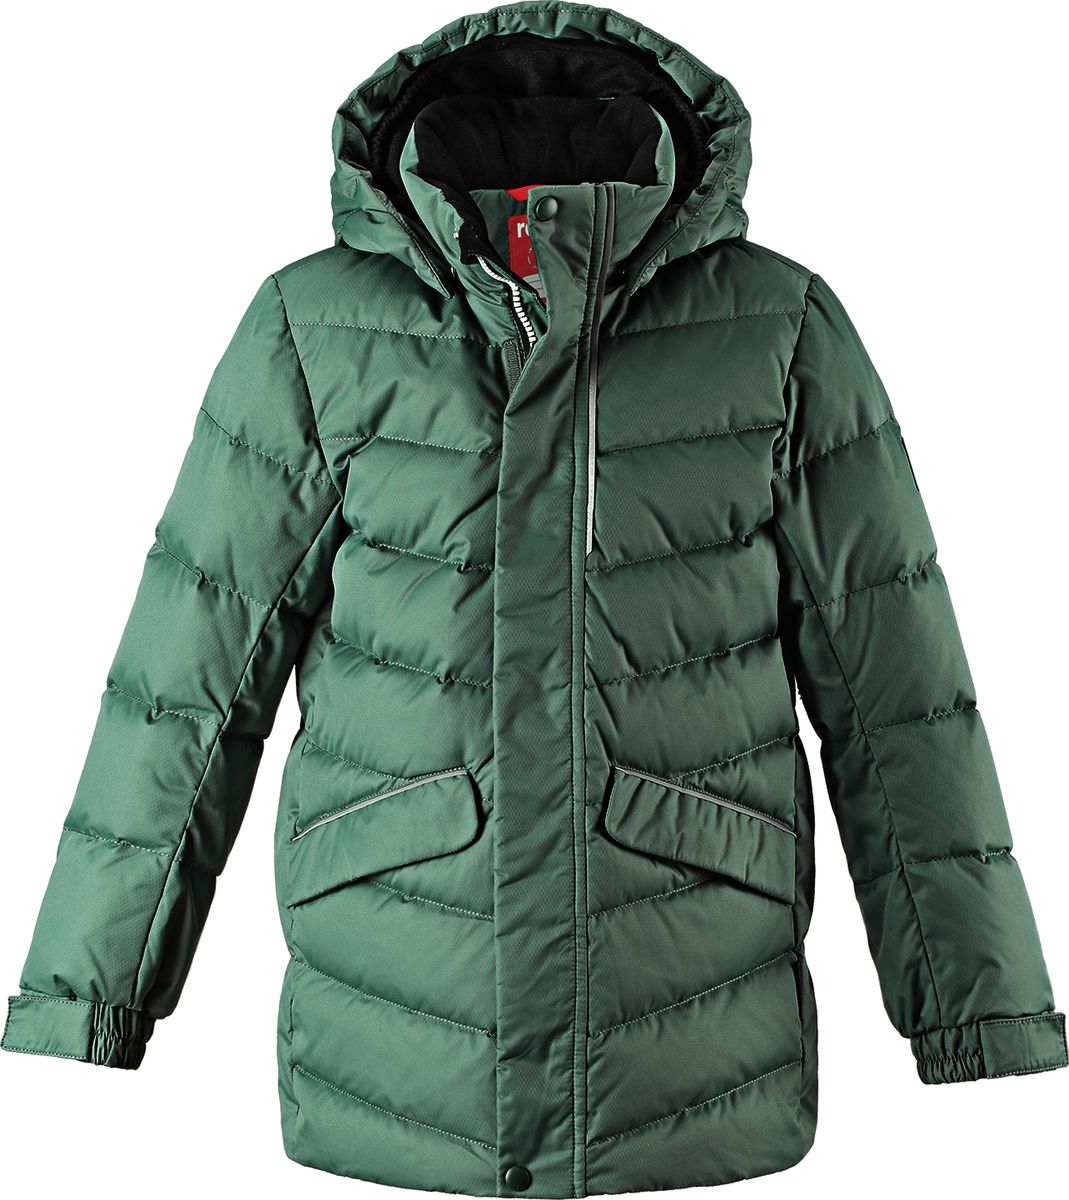 Куртка для мальчика Reima Janne, цвет: зеленый. 5313718630. Размер 158